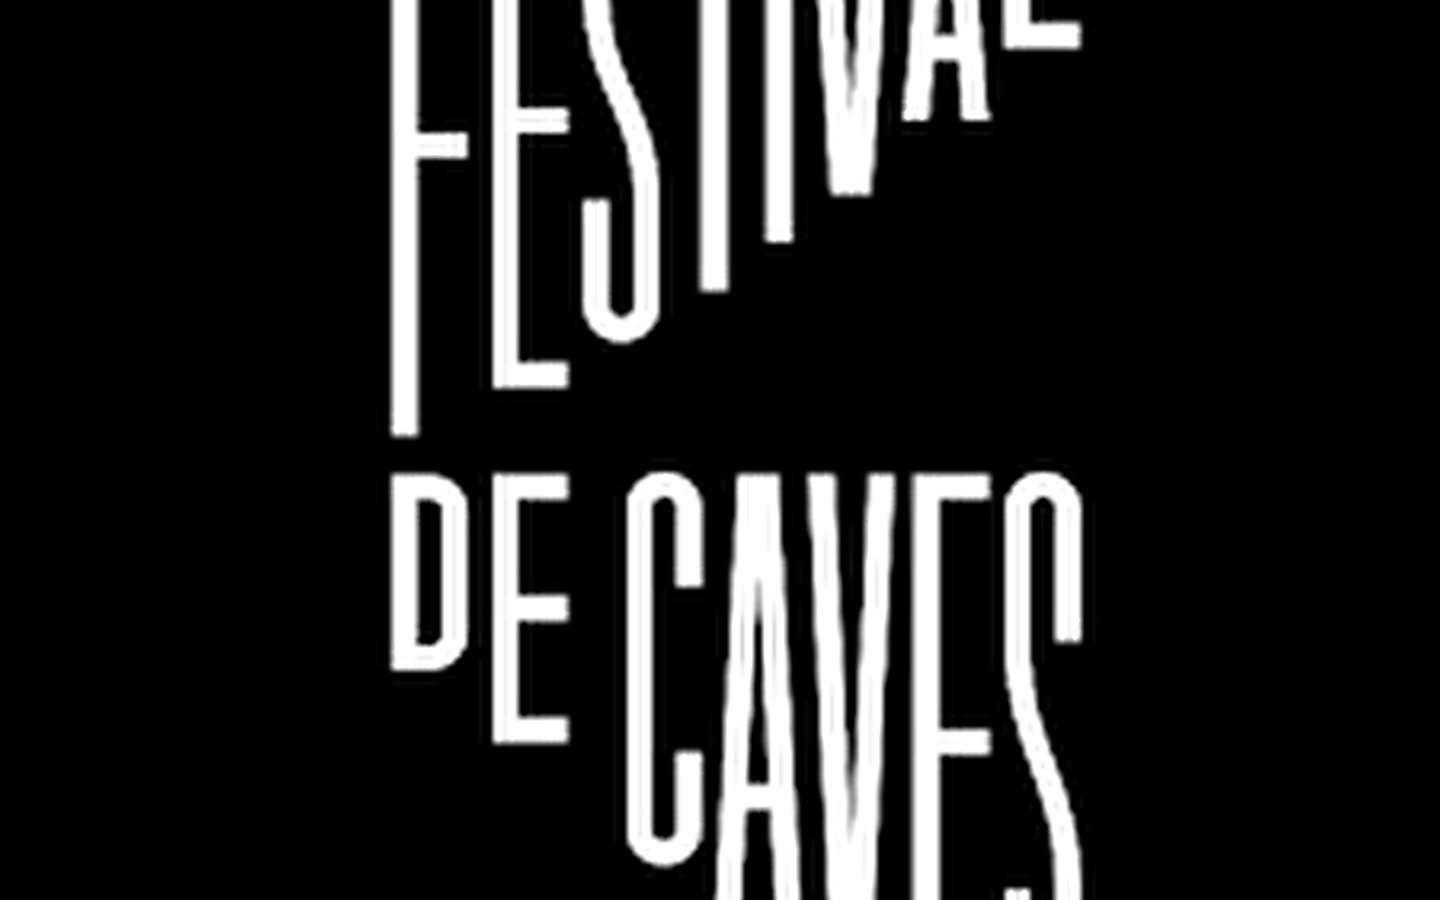 Festival de caves